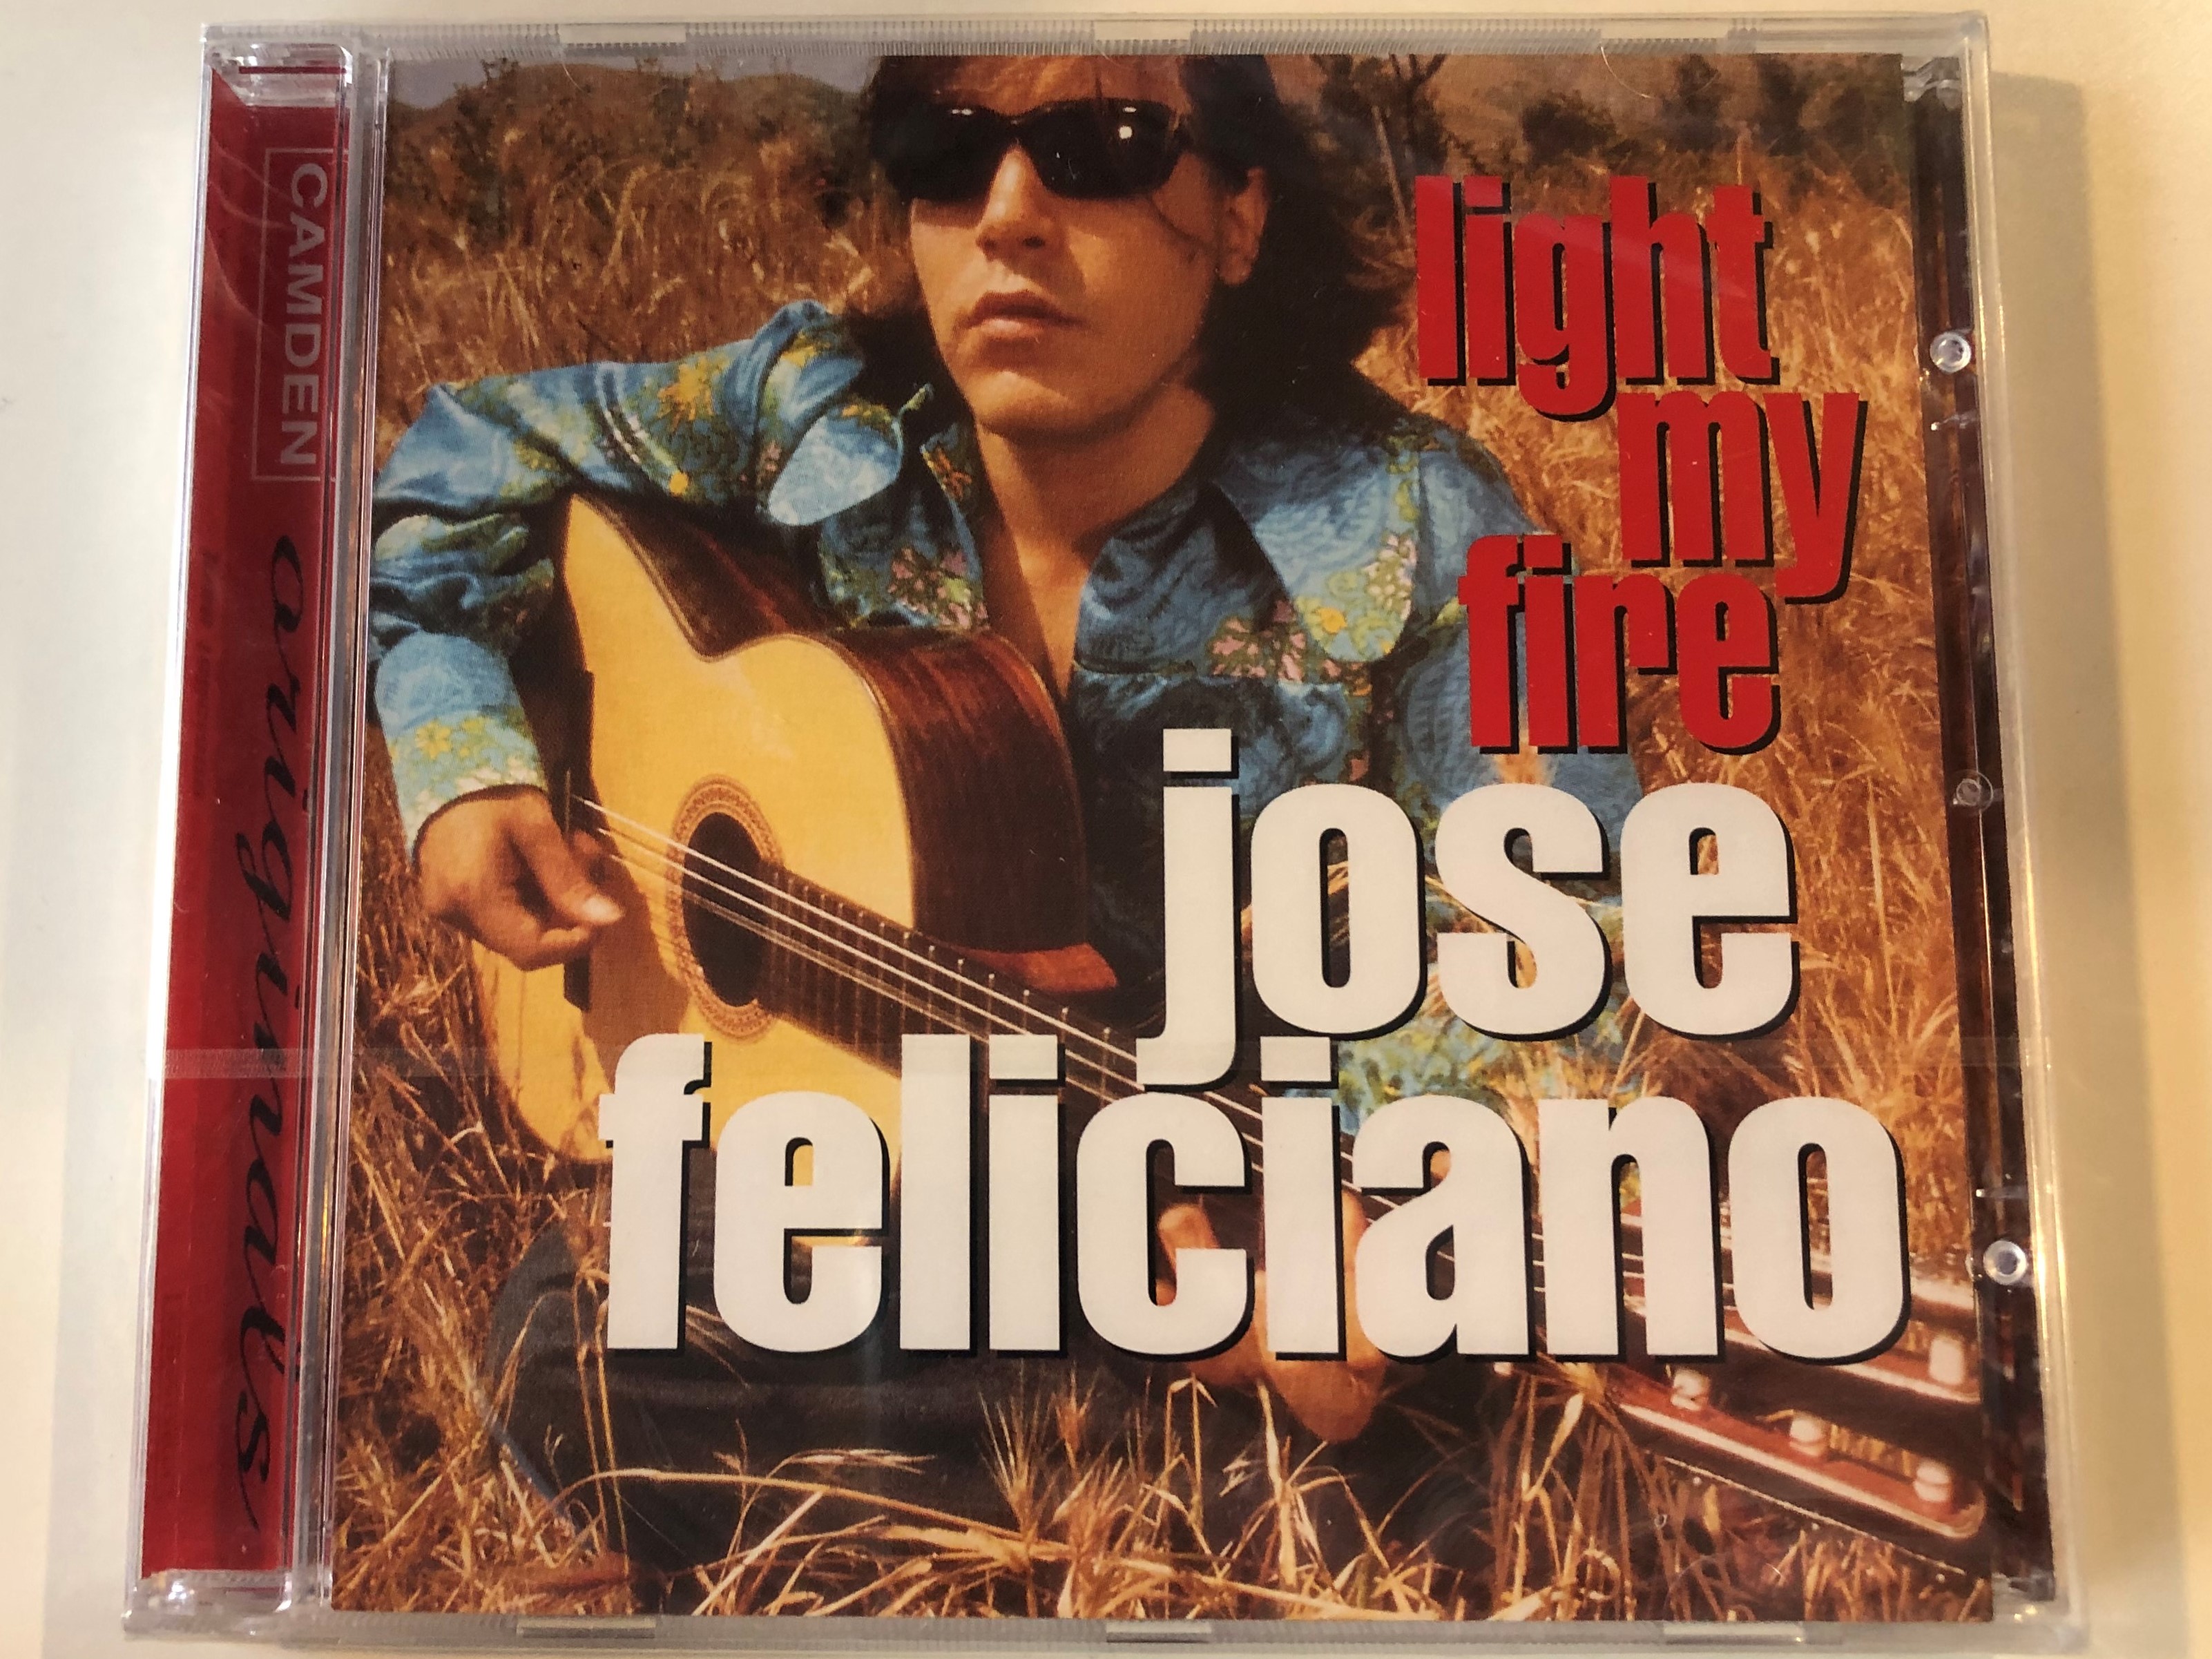 light-my-fire-jose-feliciano-bmg-audio-cd-1997-74321-449252-1-.jpg